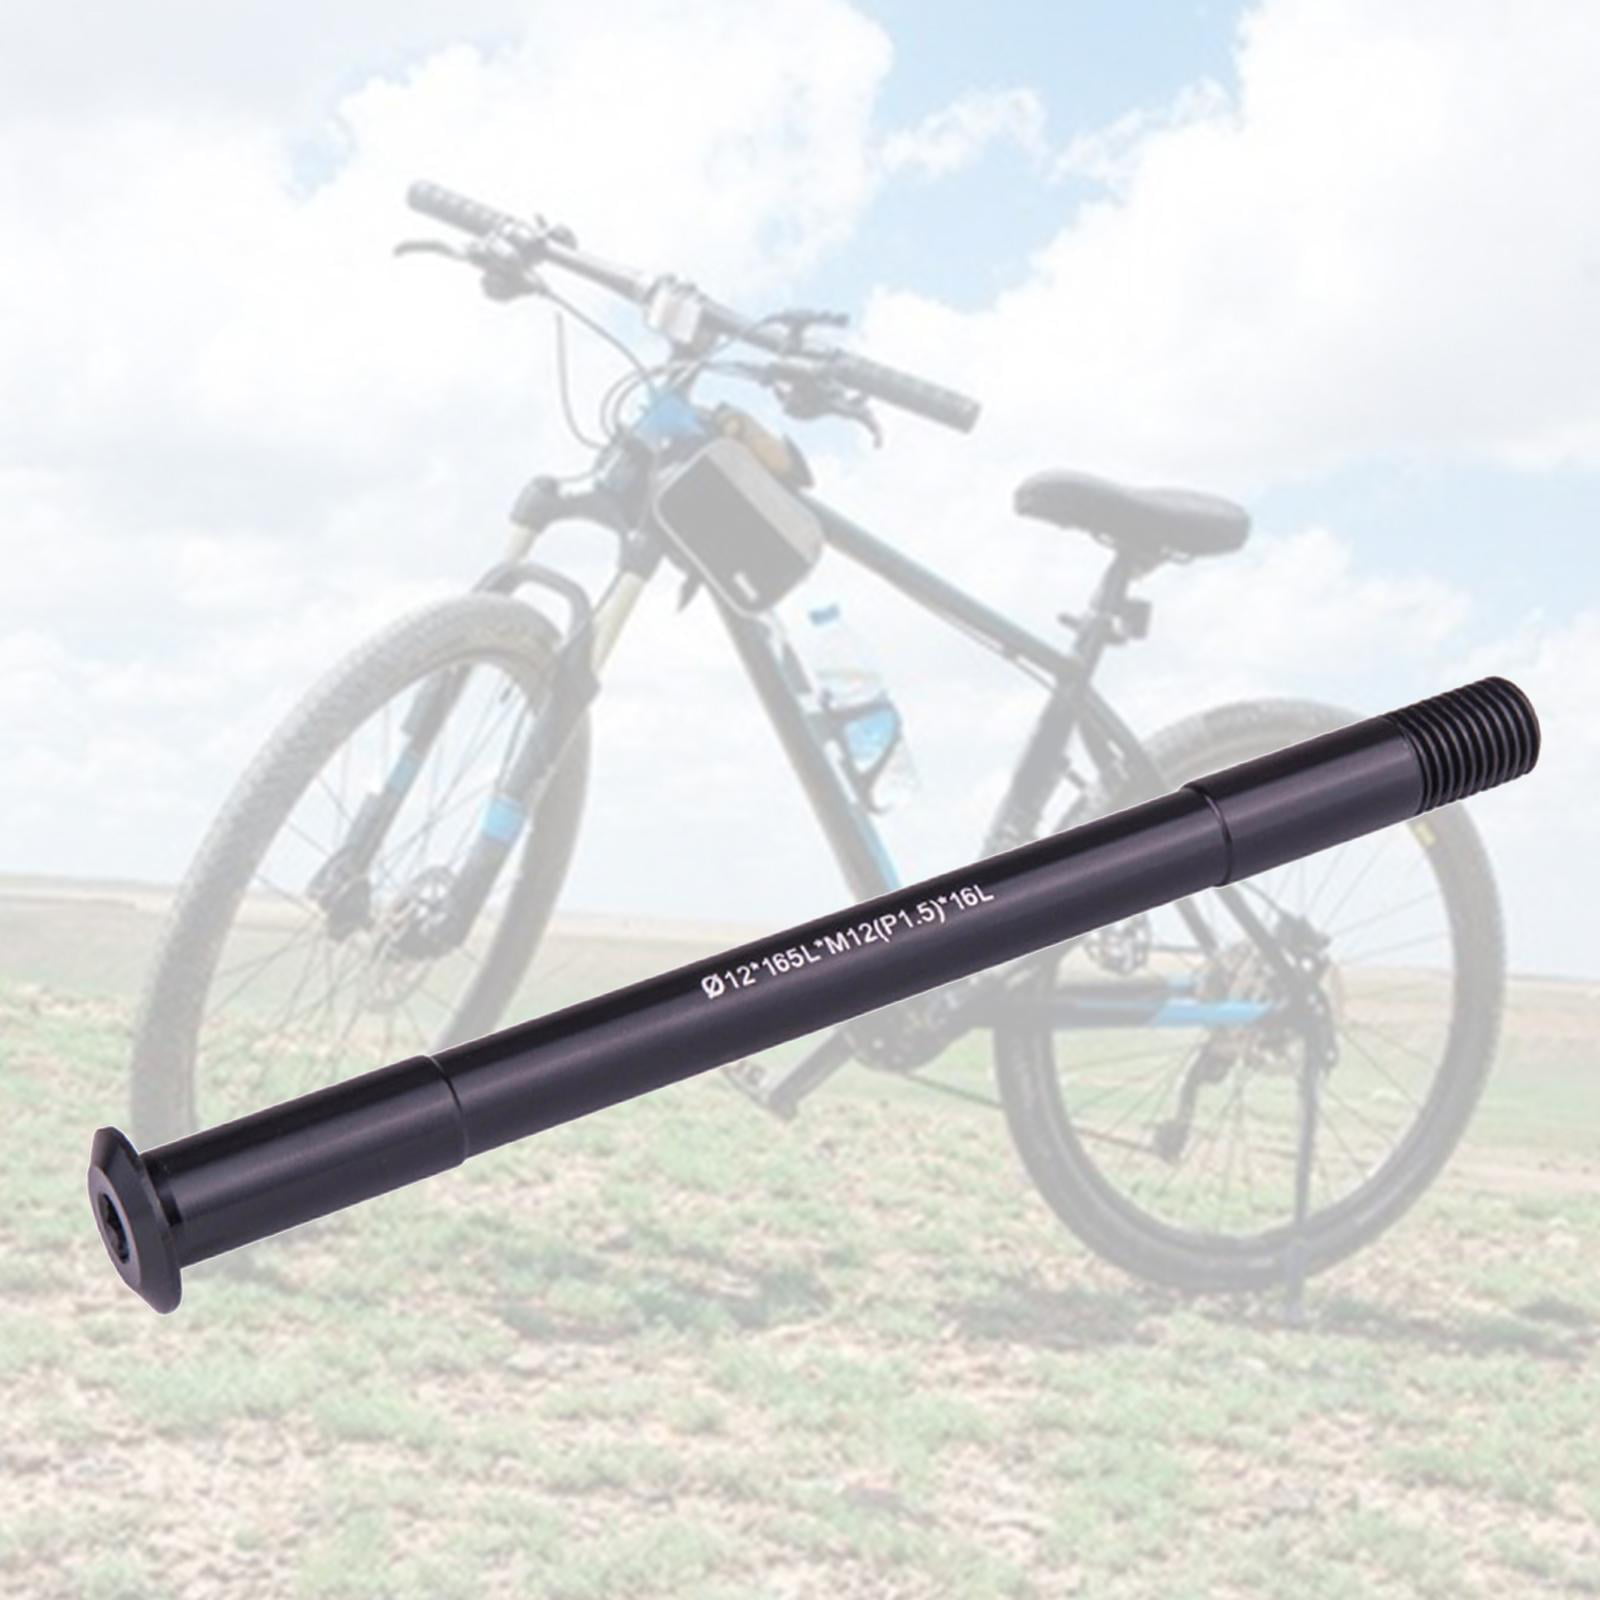 Details about   12mm MTB Bike Rear Thru Axle Quick Release Hub Conversion Skewer QR Adapter 